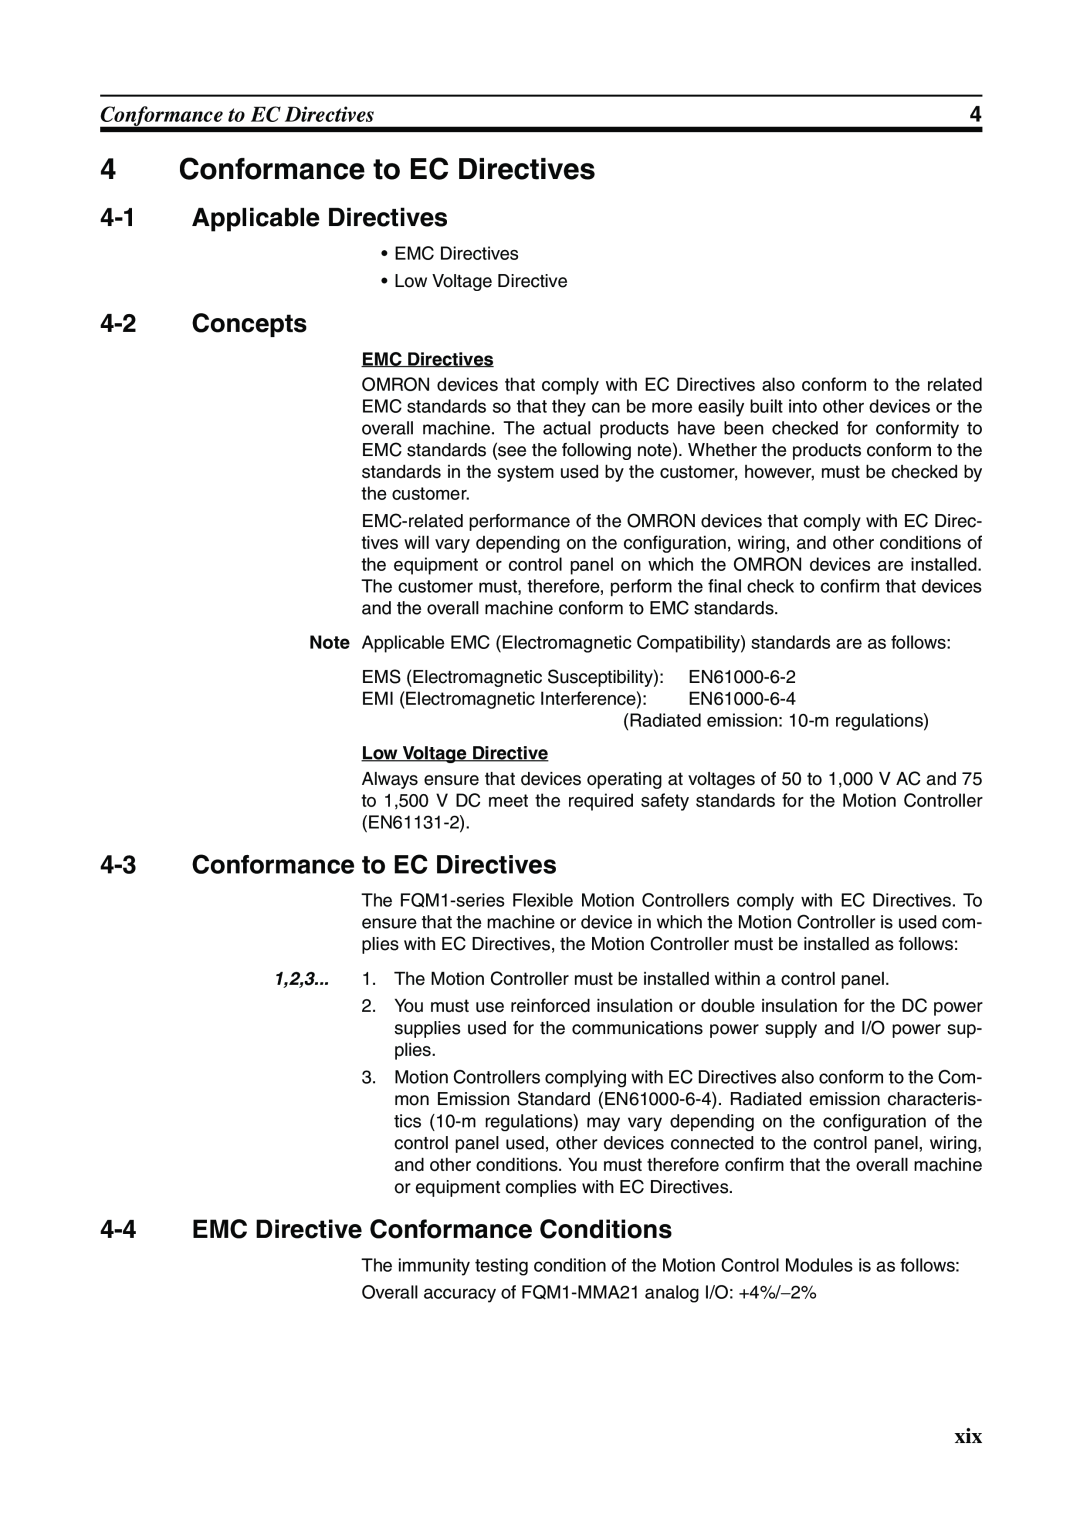 Omron FQM1-CM001 Conformance to EC Directives, EMC Directive Conformance Conditions, EMC Directives, Low Voltage Directive 